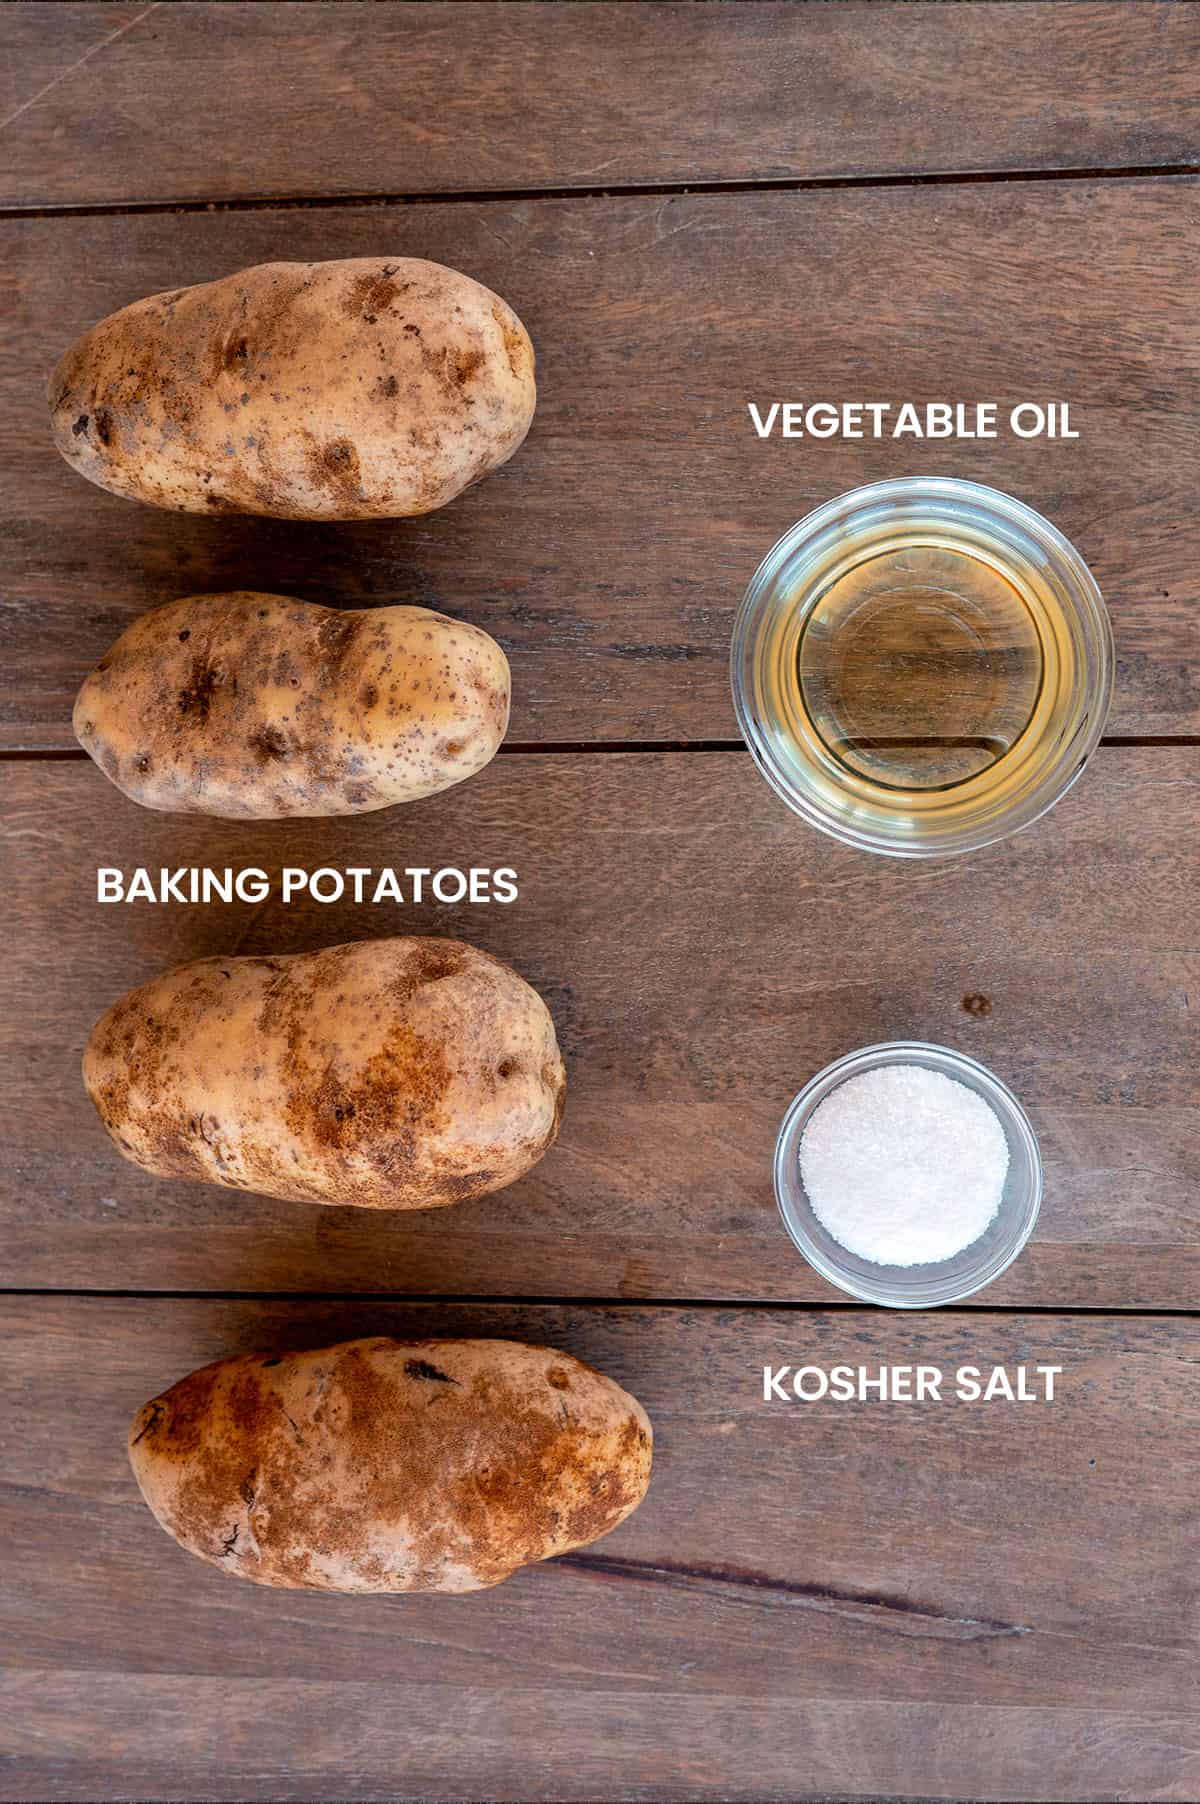 baked potatoes ingredients: Russet potato, vegetable oil, kosher salt.